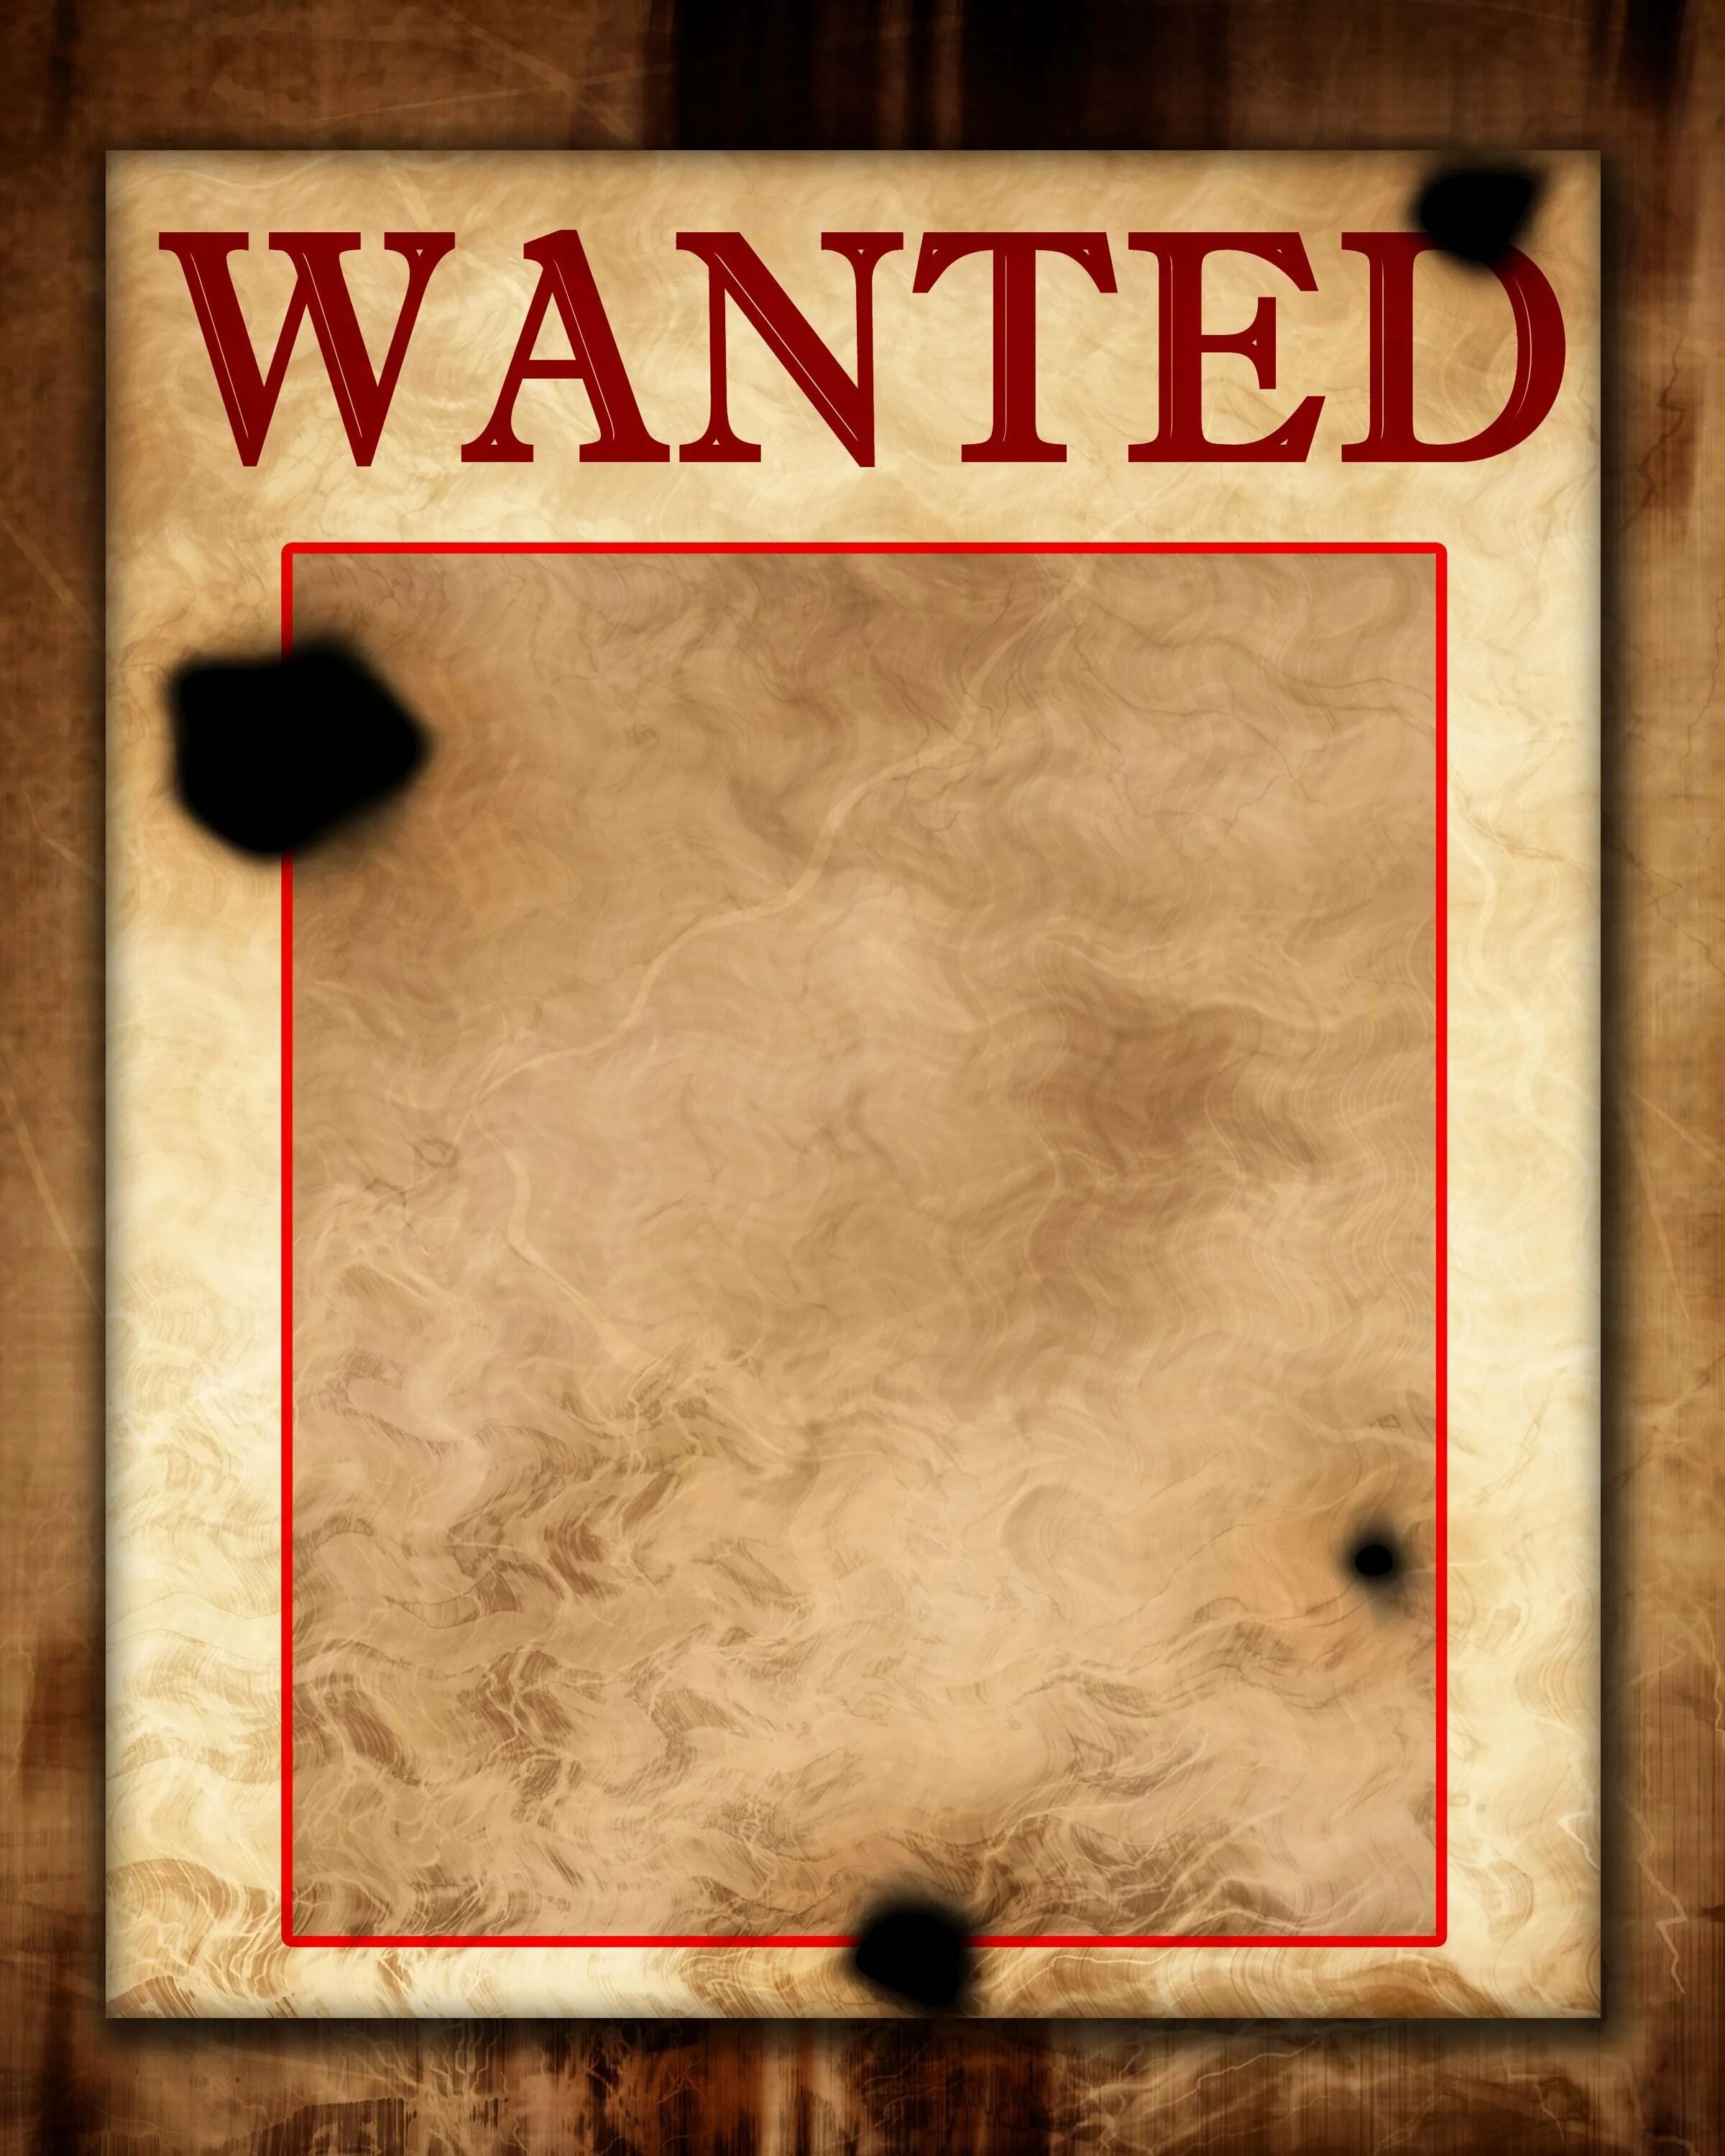 Рамка розыск. Wanted плакат. Фоторамка разыскивается. Фоторамка розыск. Www wanted com